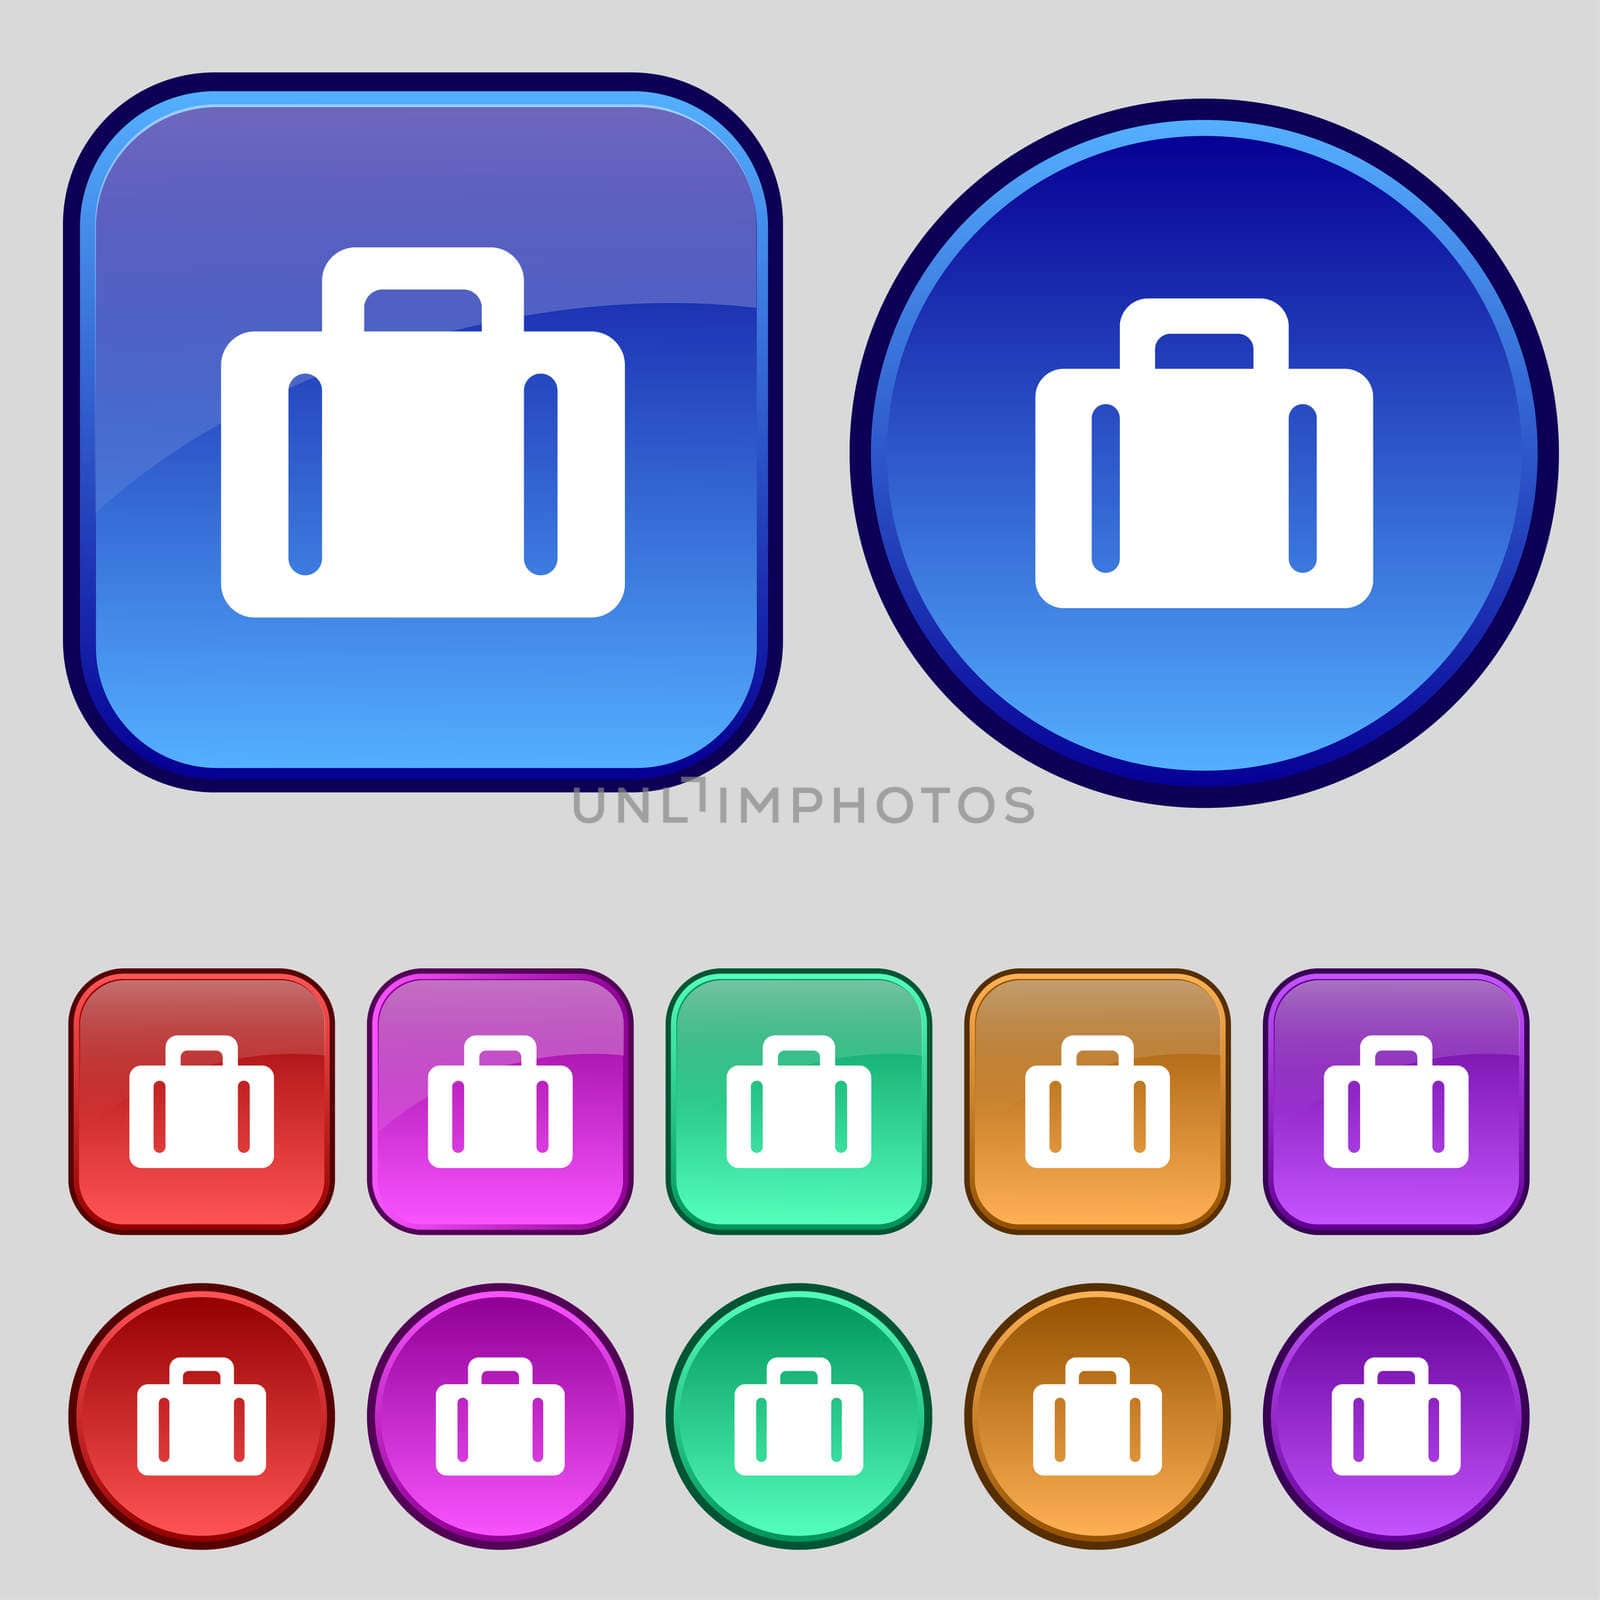 suitcase icon sign. A set of twelve vintage buttons for your design. illustration